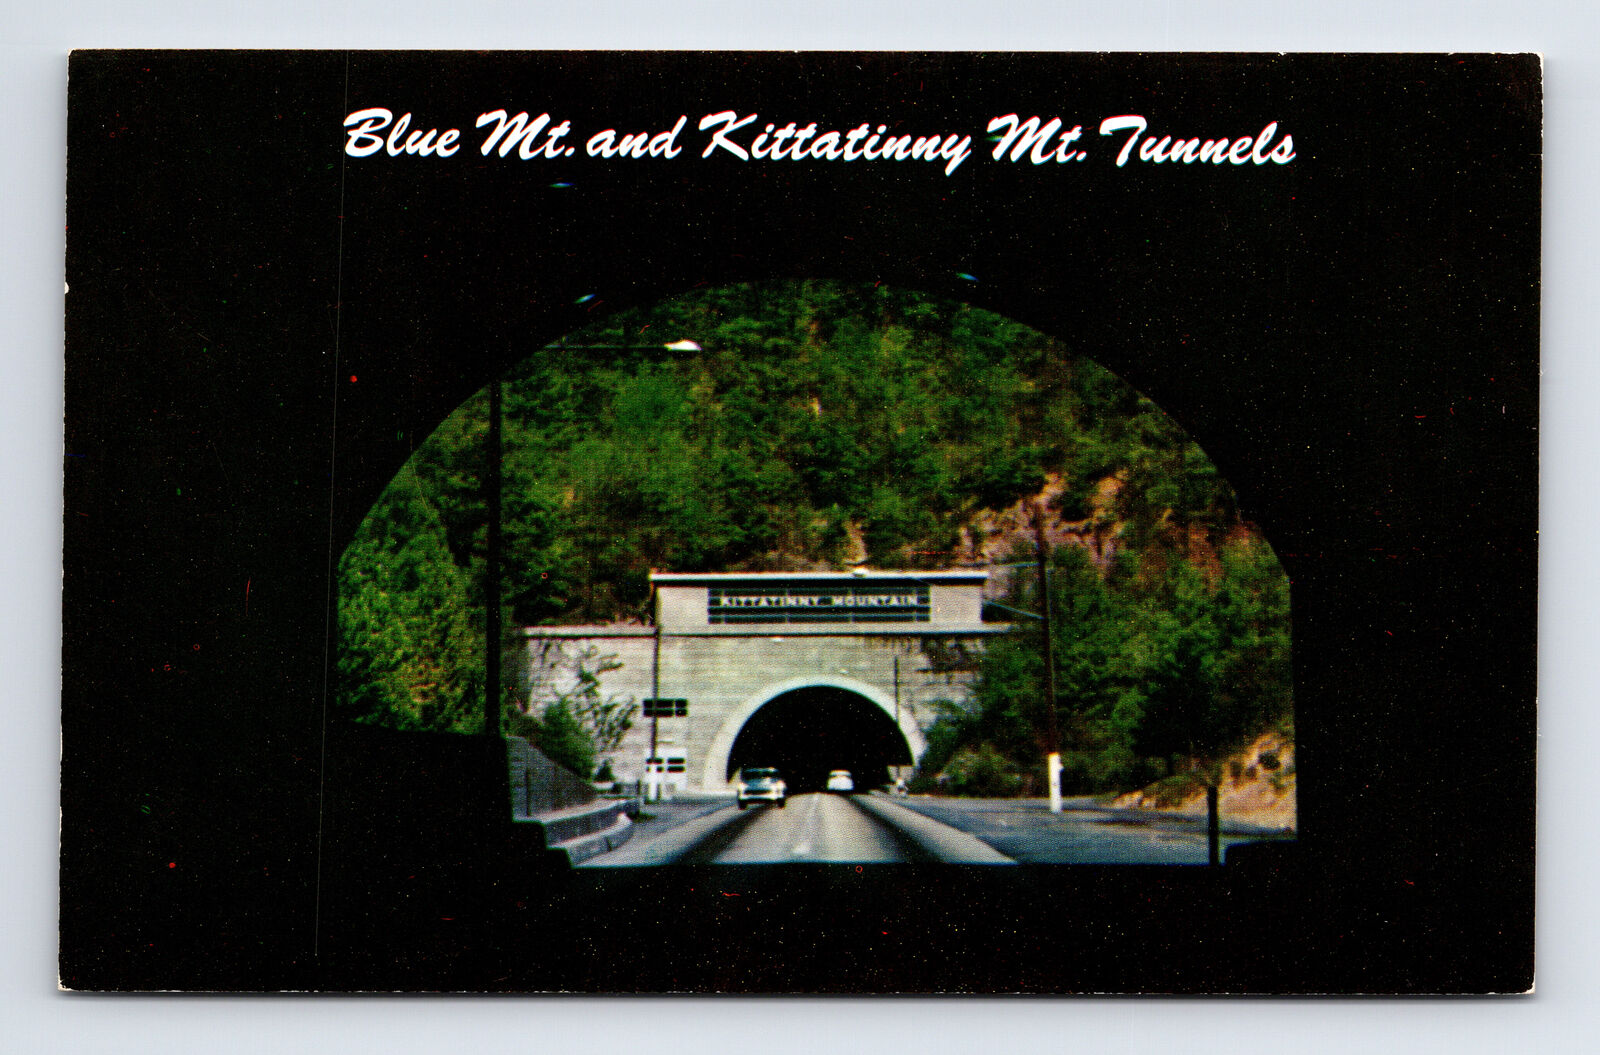 Blue Mt & Kittatinny Mt Tunnels Pennsylvania Turnpike Appalacia PA Postcard